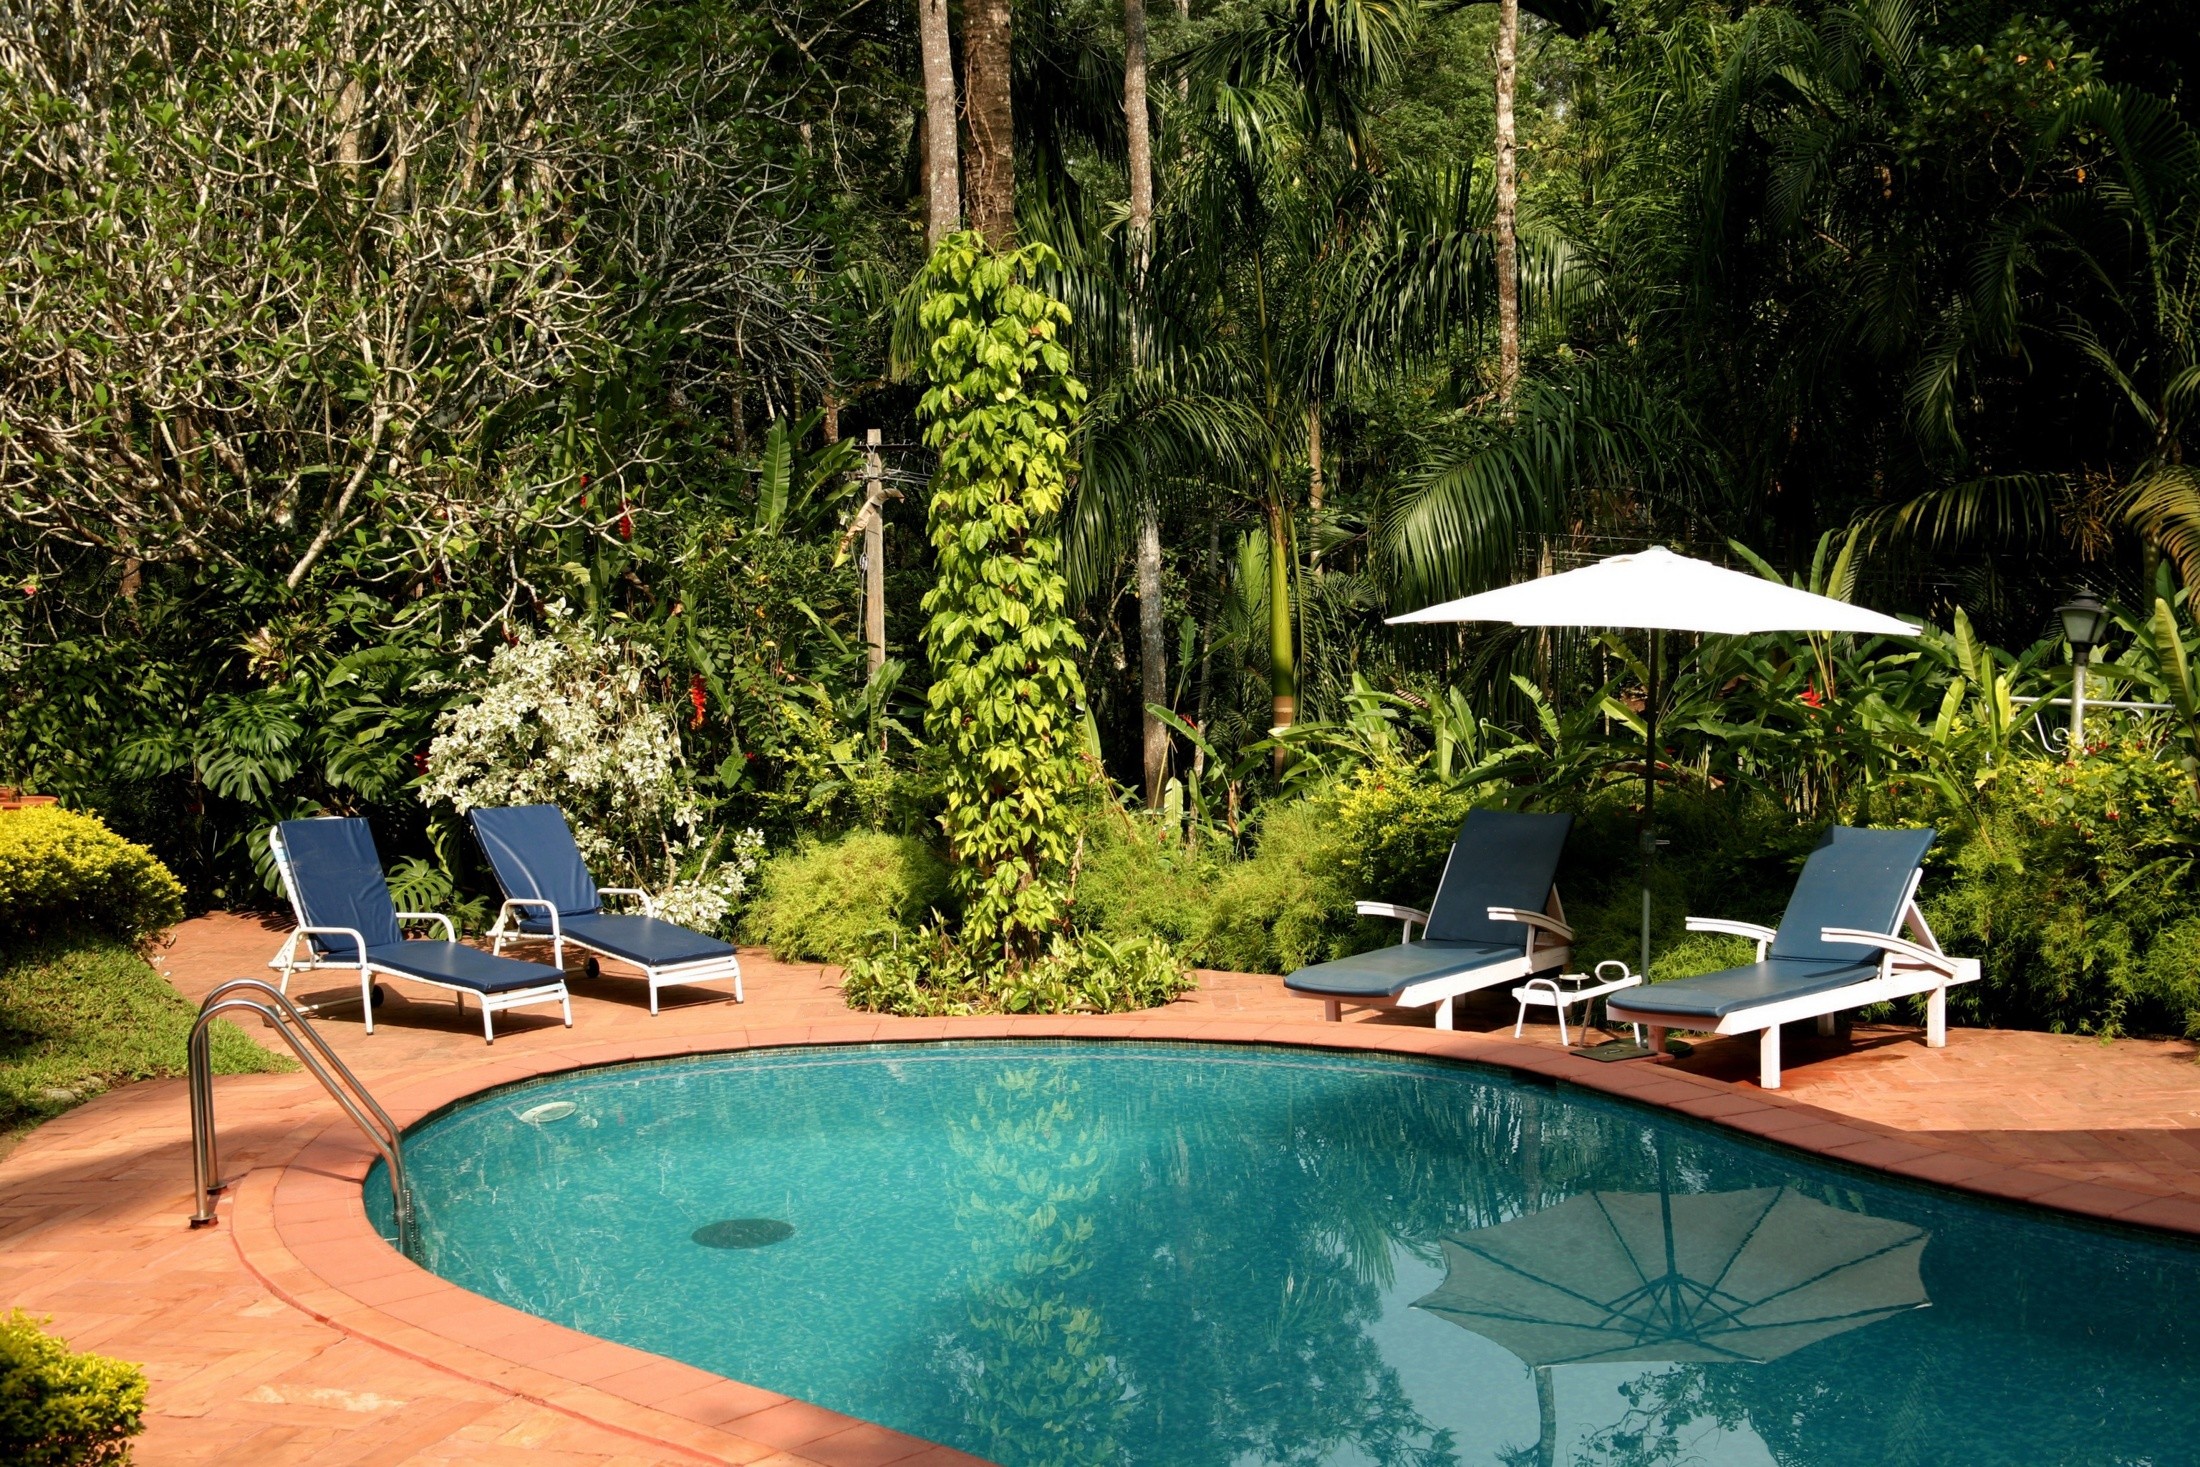 Backyard Swimming Pool Deck Chairs Beach Umbrella Garden 2200x1467